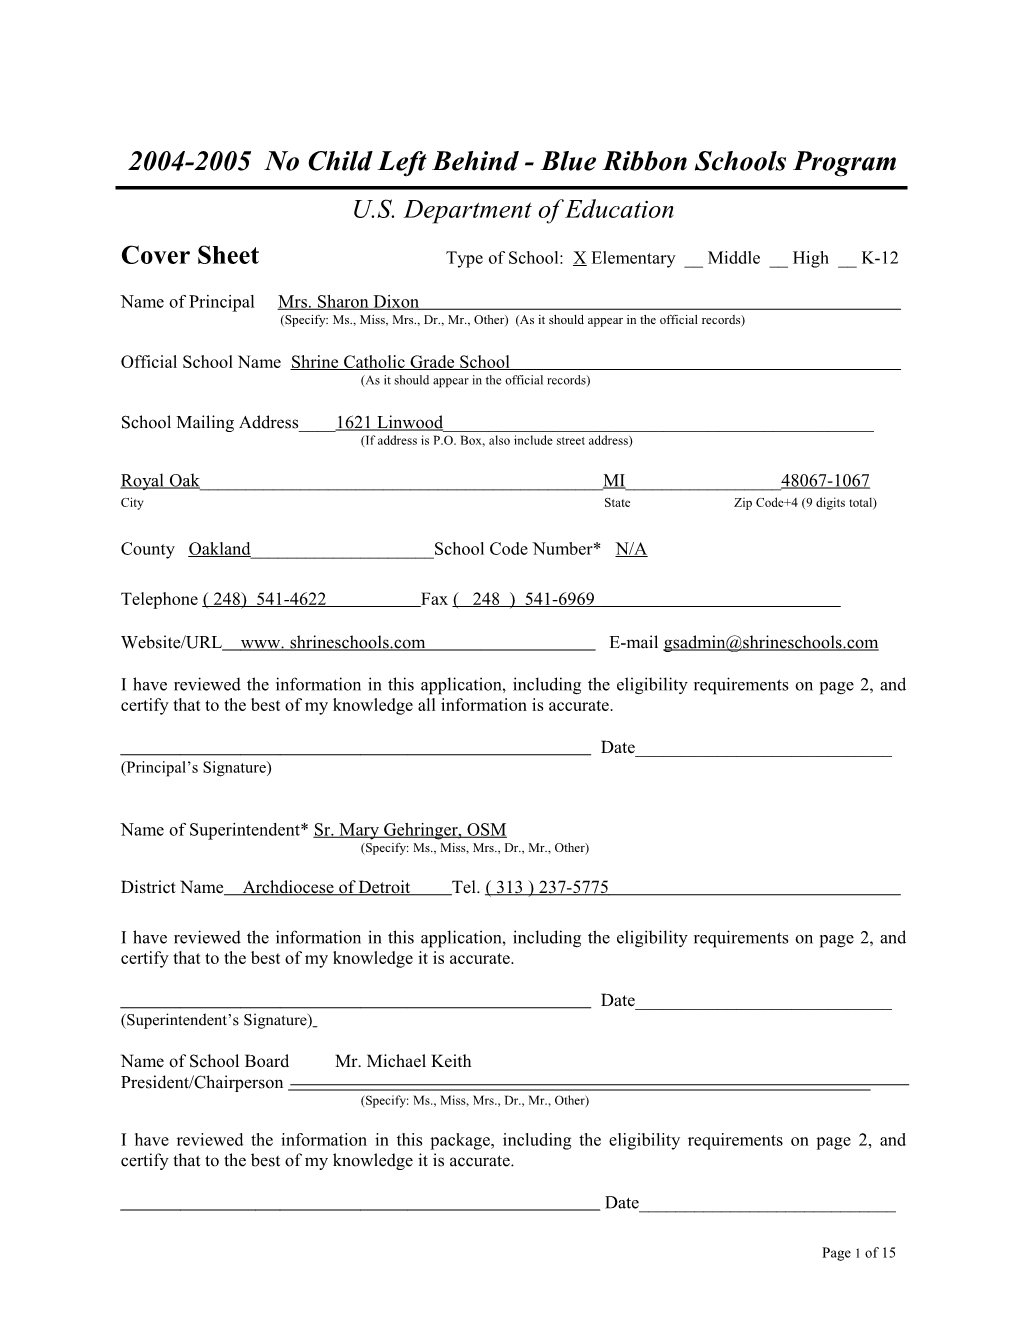 Shrine Catholic Grade School Application: 2004-2005, No Child Left Behind - Blue Ribbon